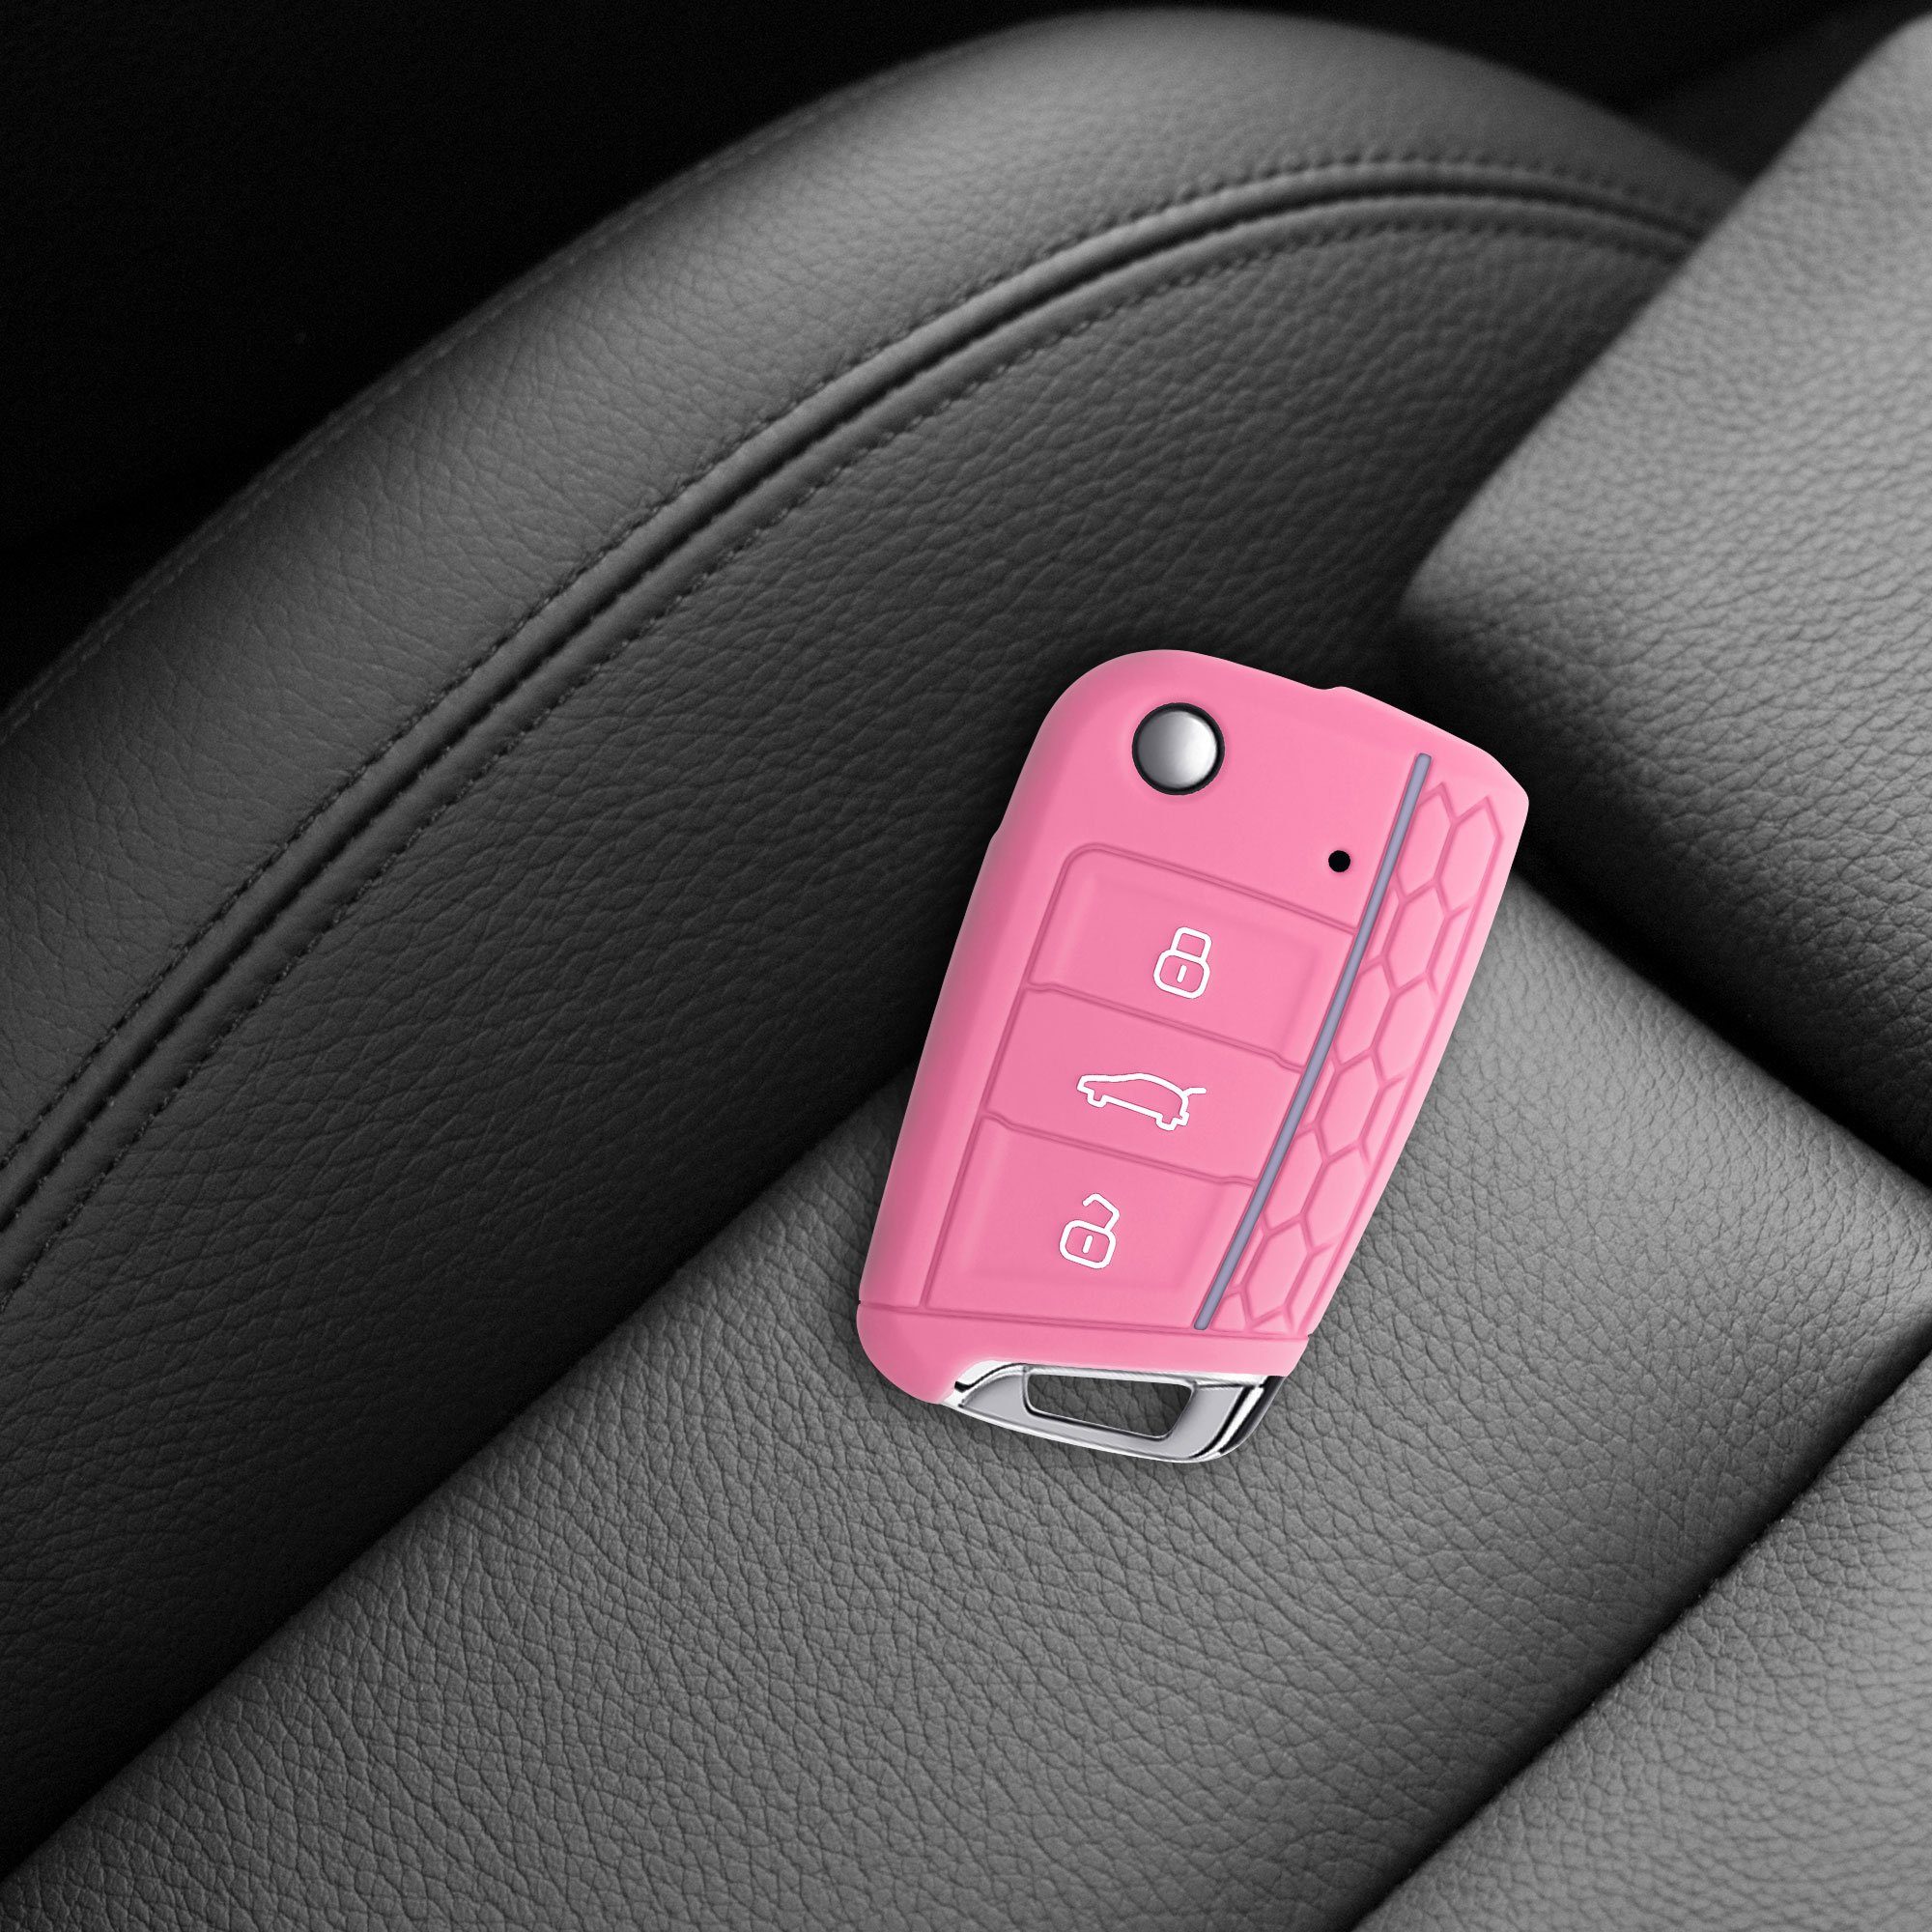 Hülle Cover Schlüsselhülle kwmobile Rosa-Pastelllila Golf Silikon MK7, Schlüssel für Case 7 Autoschlüssel VW Schlüsseltasche